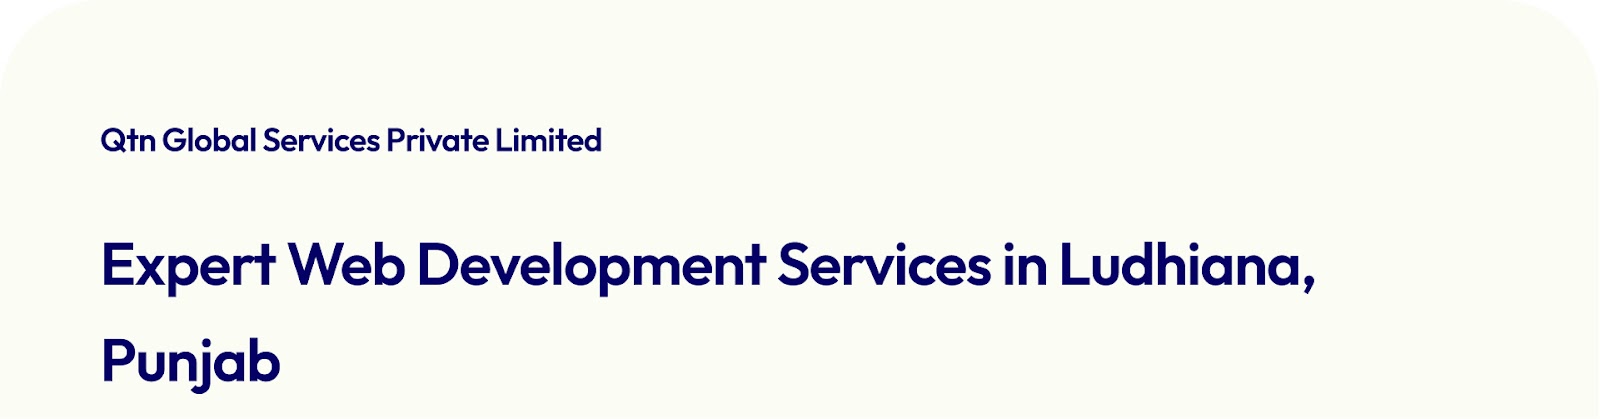 Expert Web Development Services in Ludhiana, Punjab 